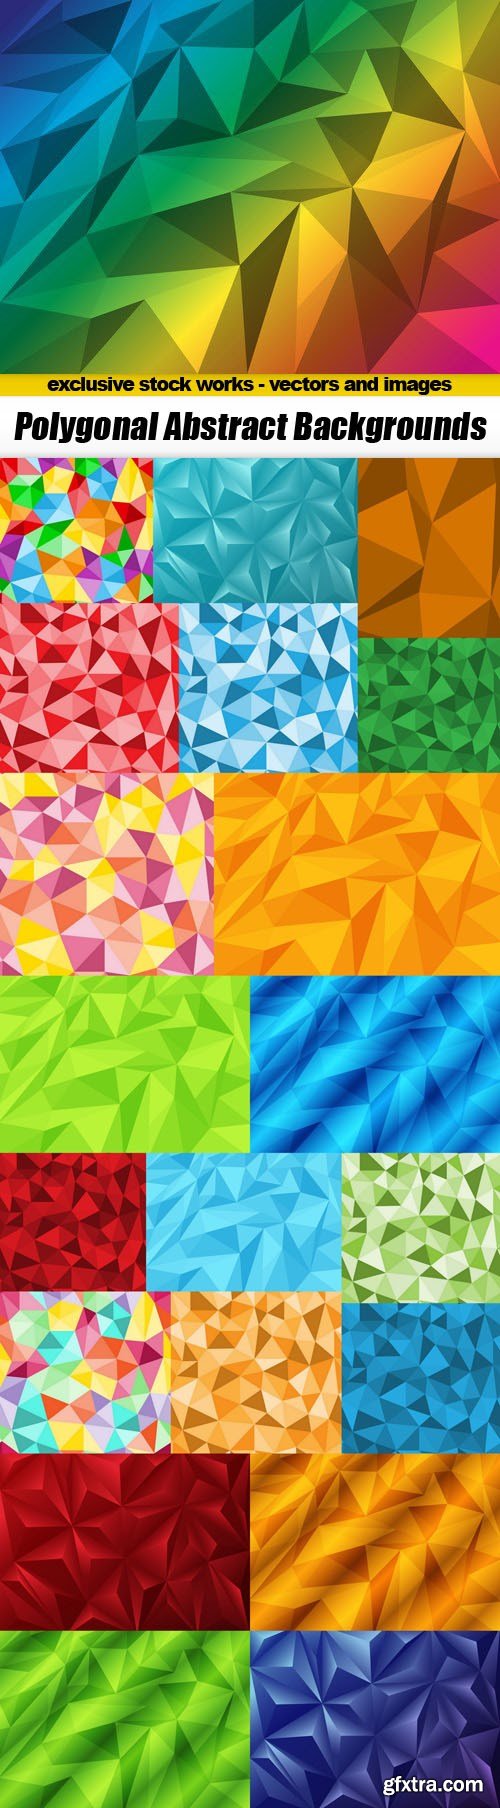 Polygonal Abstract Backgrounds - 21xAI